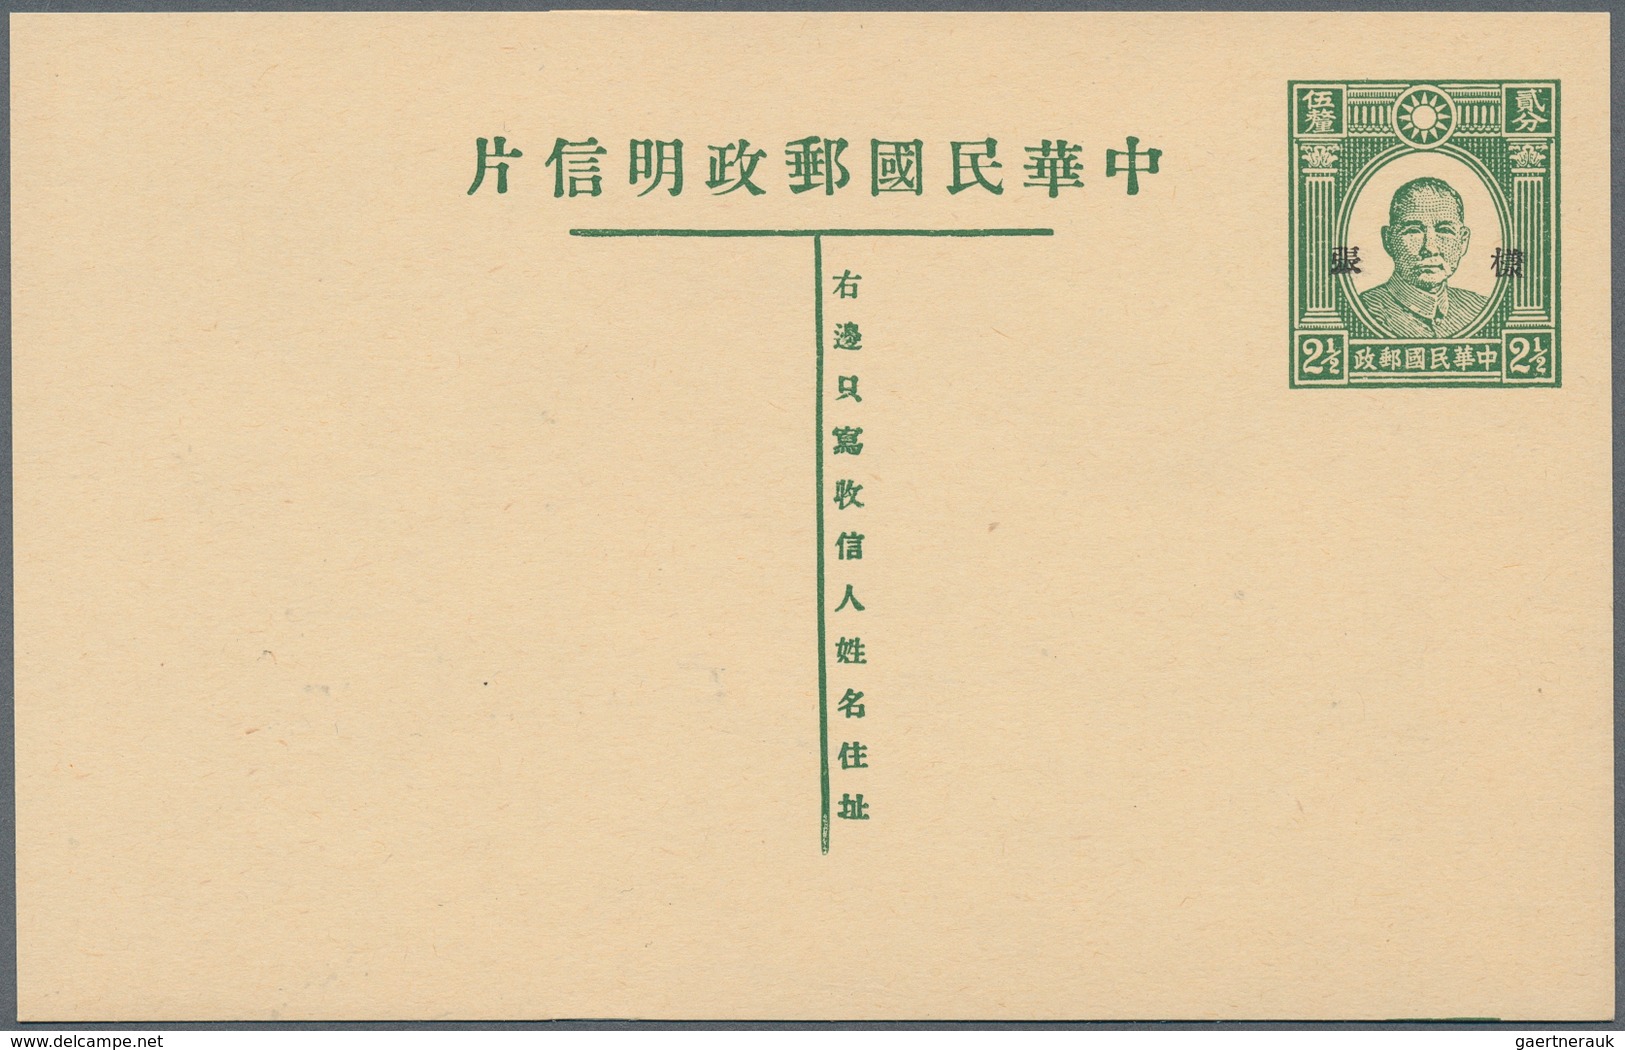 22415 China - Ganzsachen: 1935/36 (ca.), specimen ovpts: SYS stationery cards 1 C., 2 1/2 C., 15 C. resp.